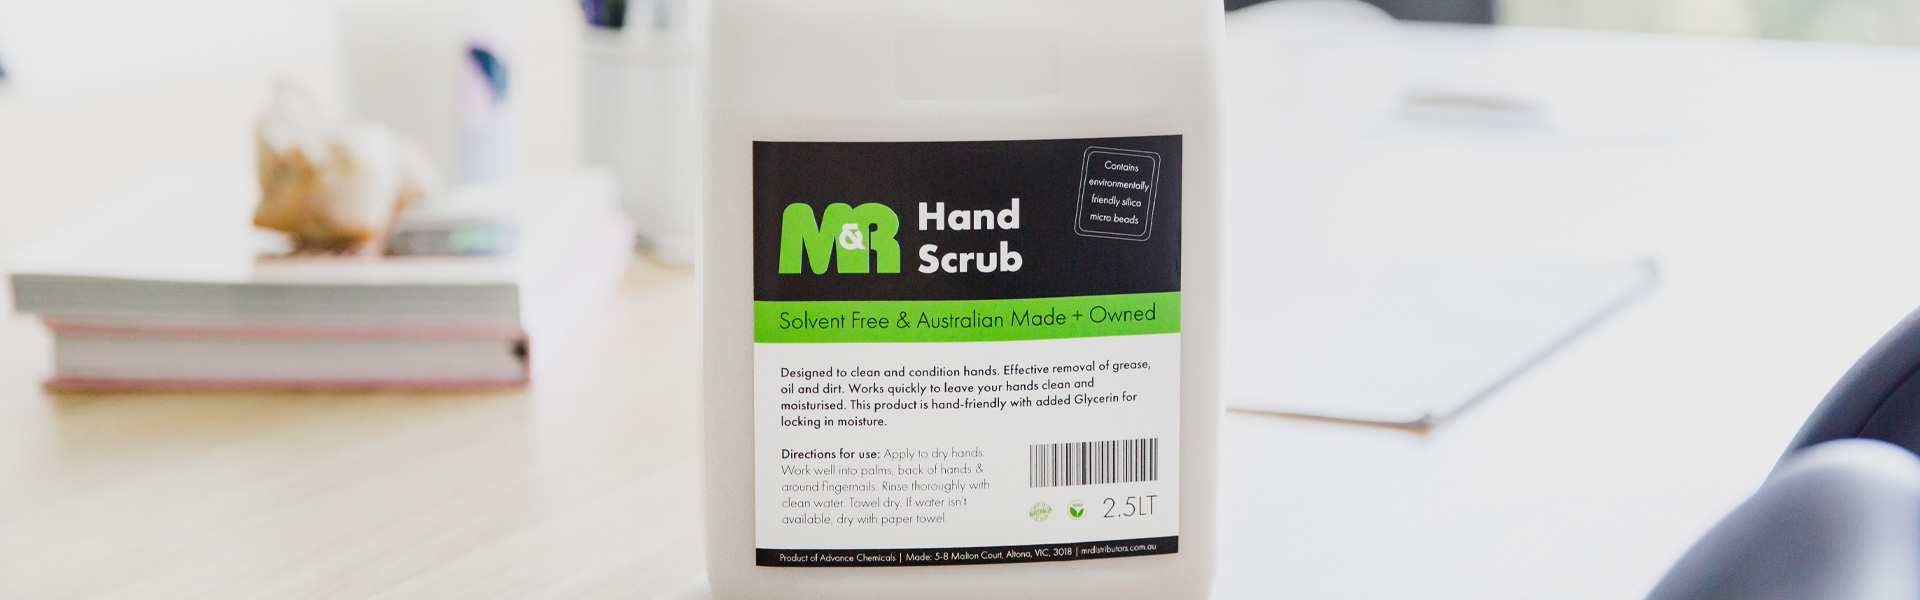 M&R hand scrub.